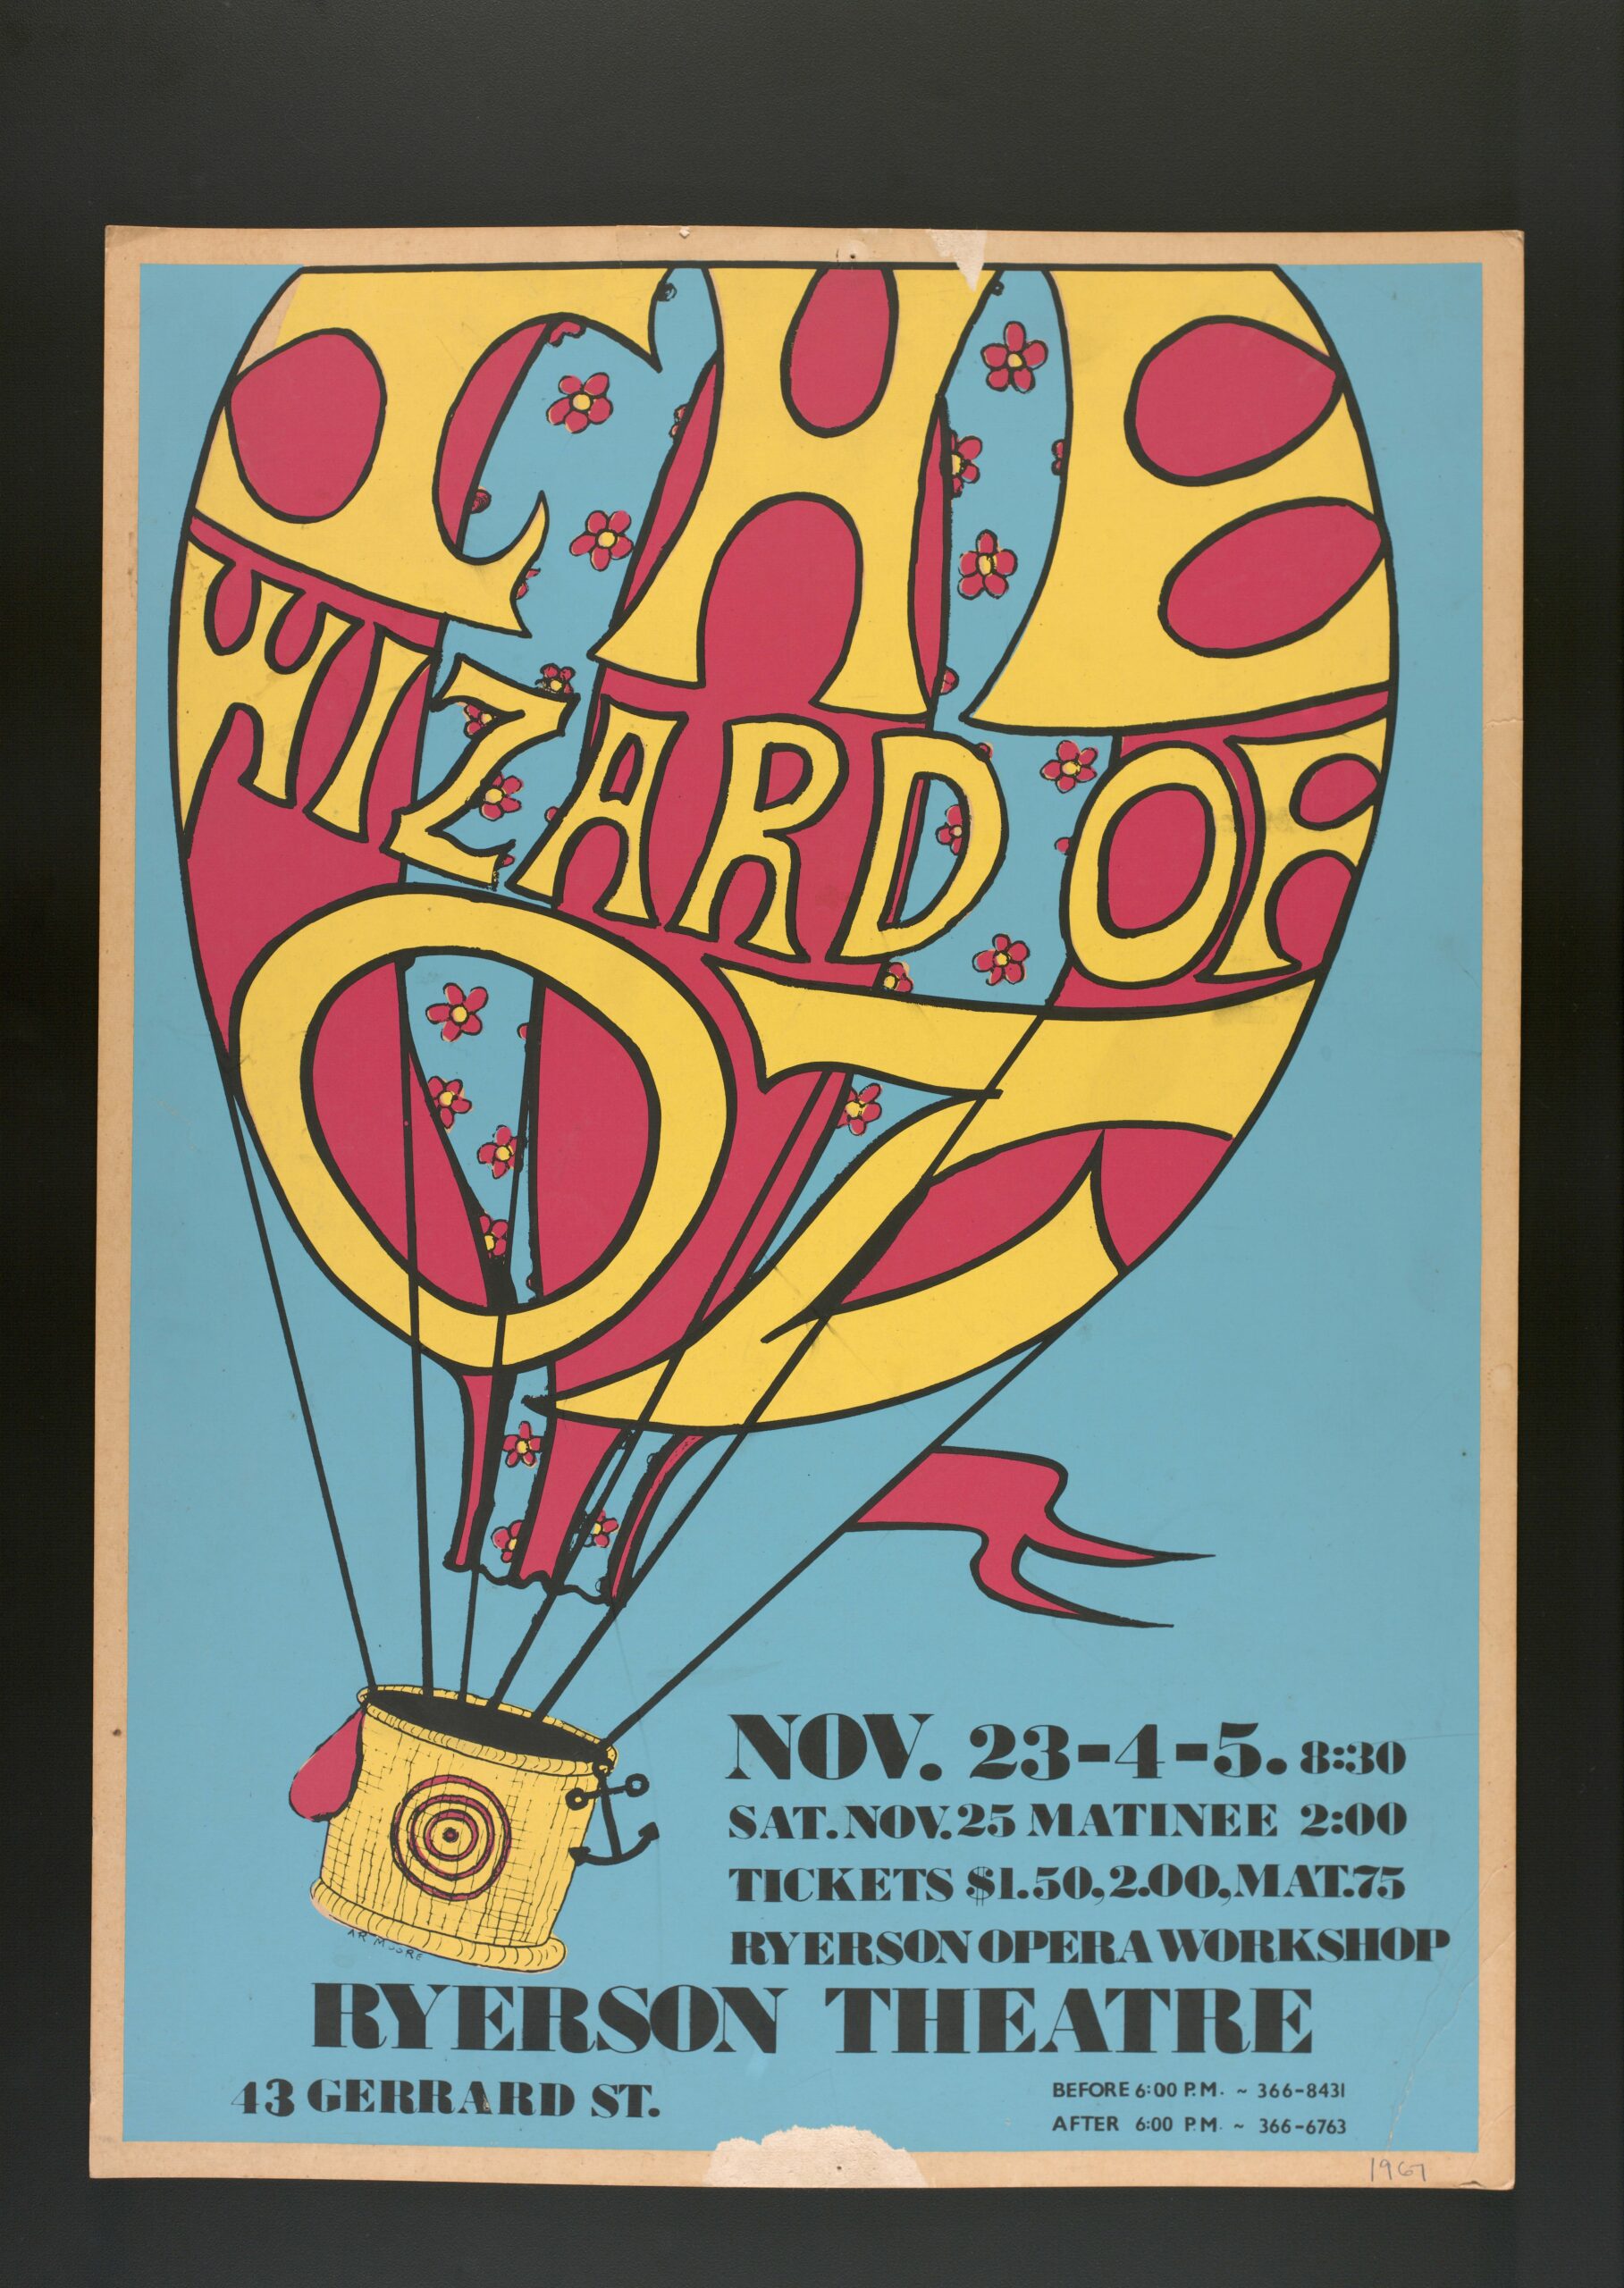 The Wizard of Oz Ryerson Opera Workshop poster, 1967